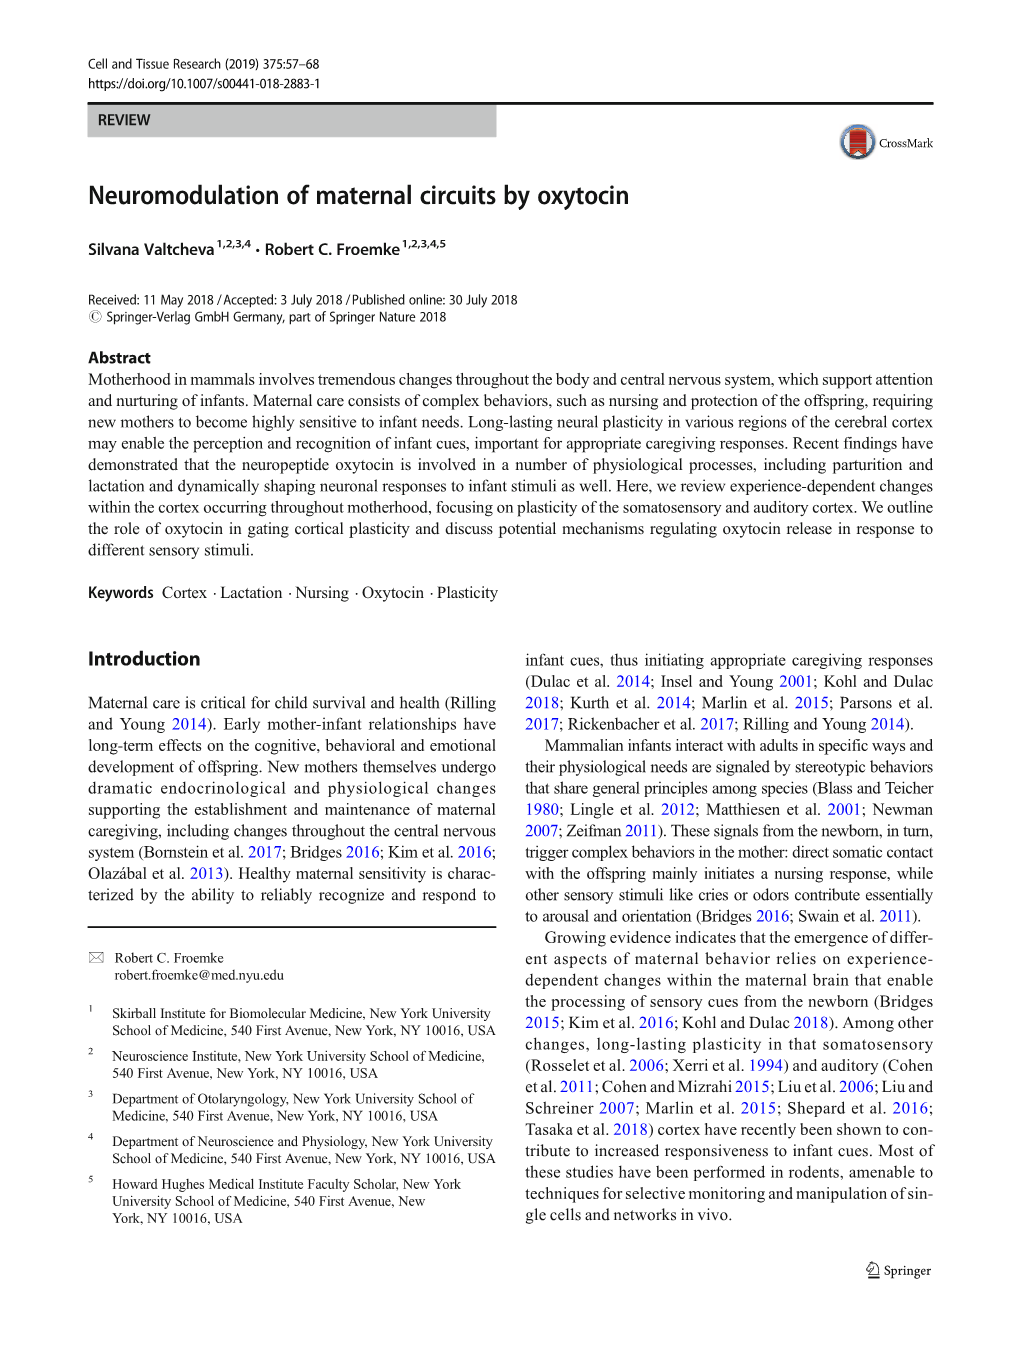 Neuromodulation of Maternal Circuits by Oxytocin